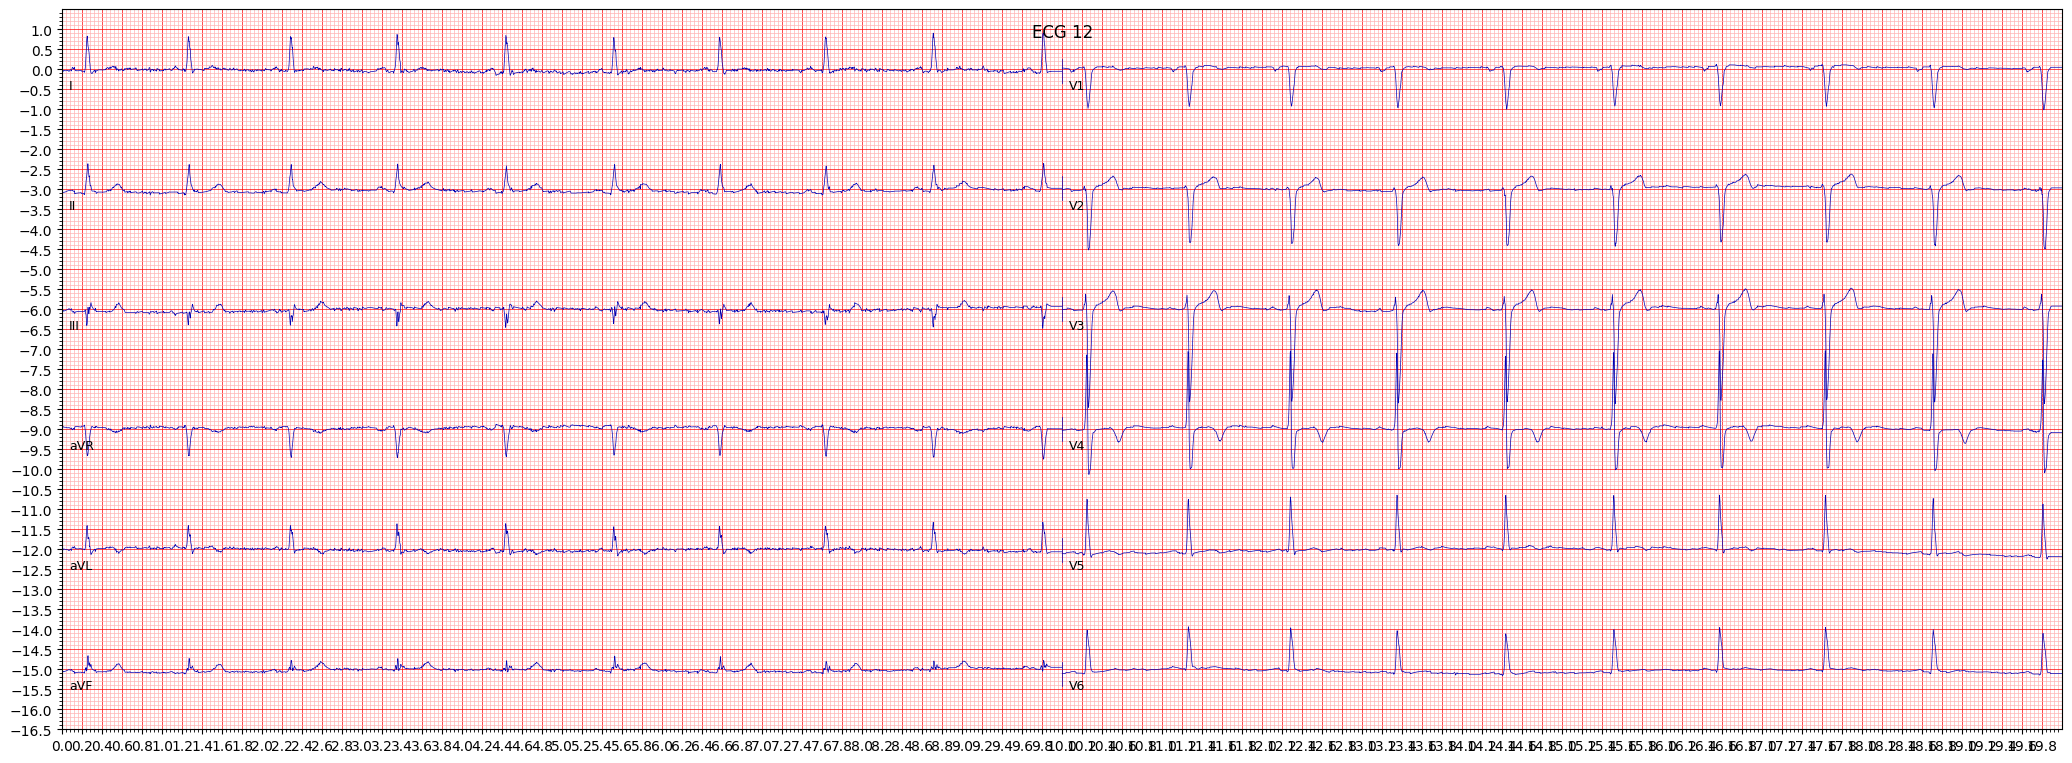 subendocardial injury in anteroseptal leads (INJAS) example 6120